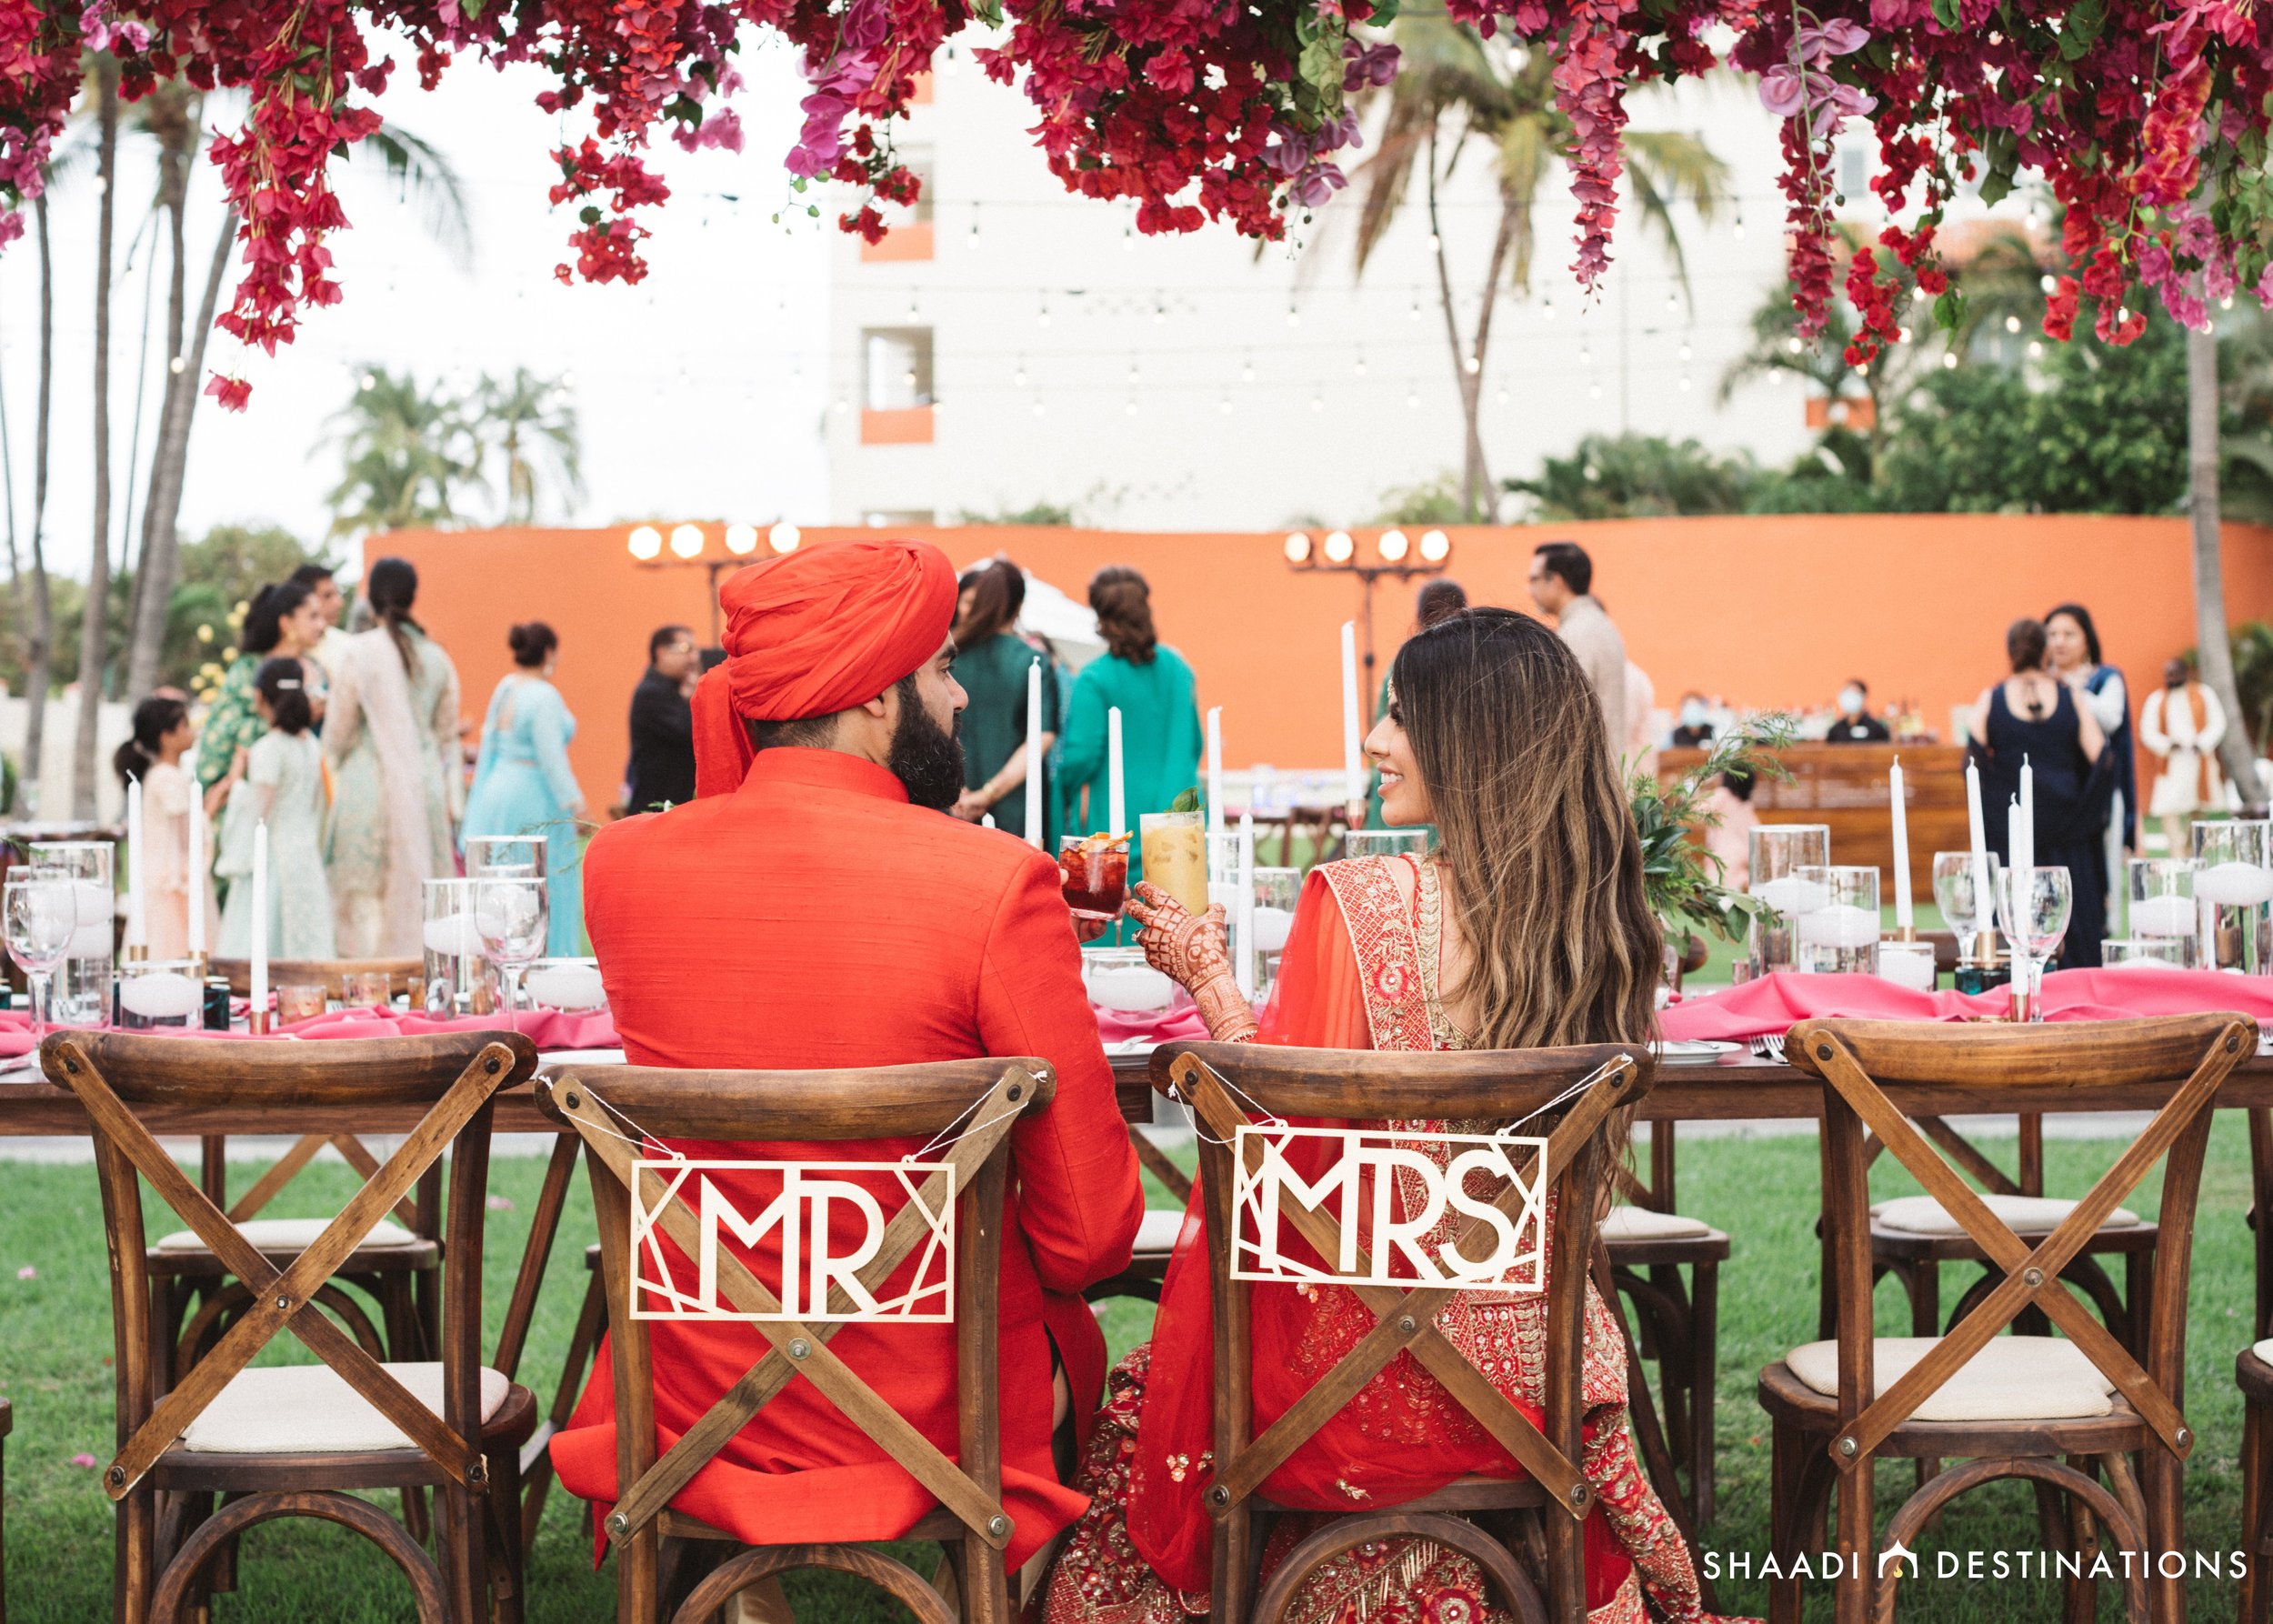 Indian Destination Wedding - Saarah + Sunil - Grand Velas Riviera Nayarit - 144.jpg